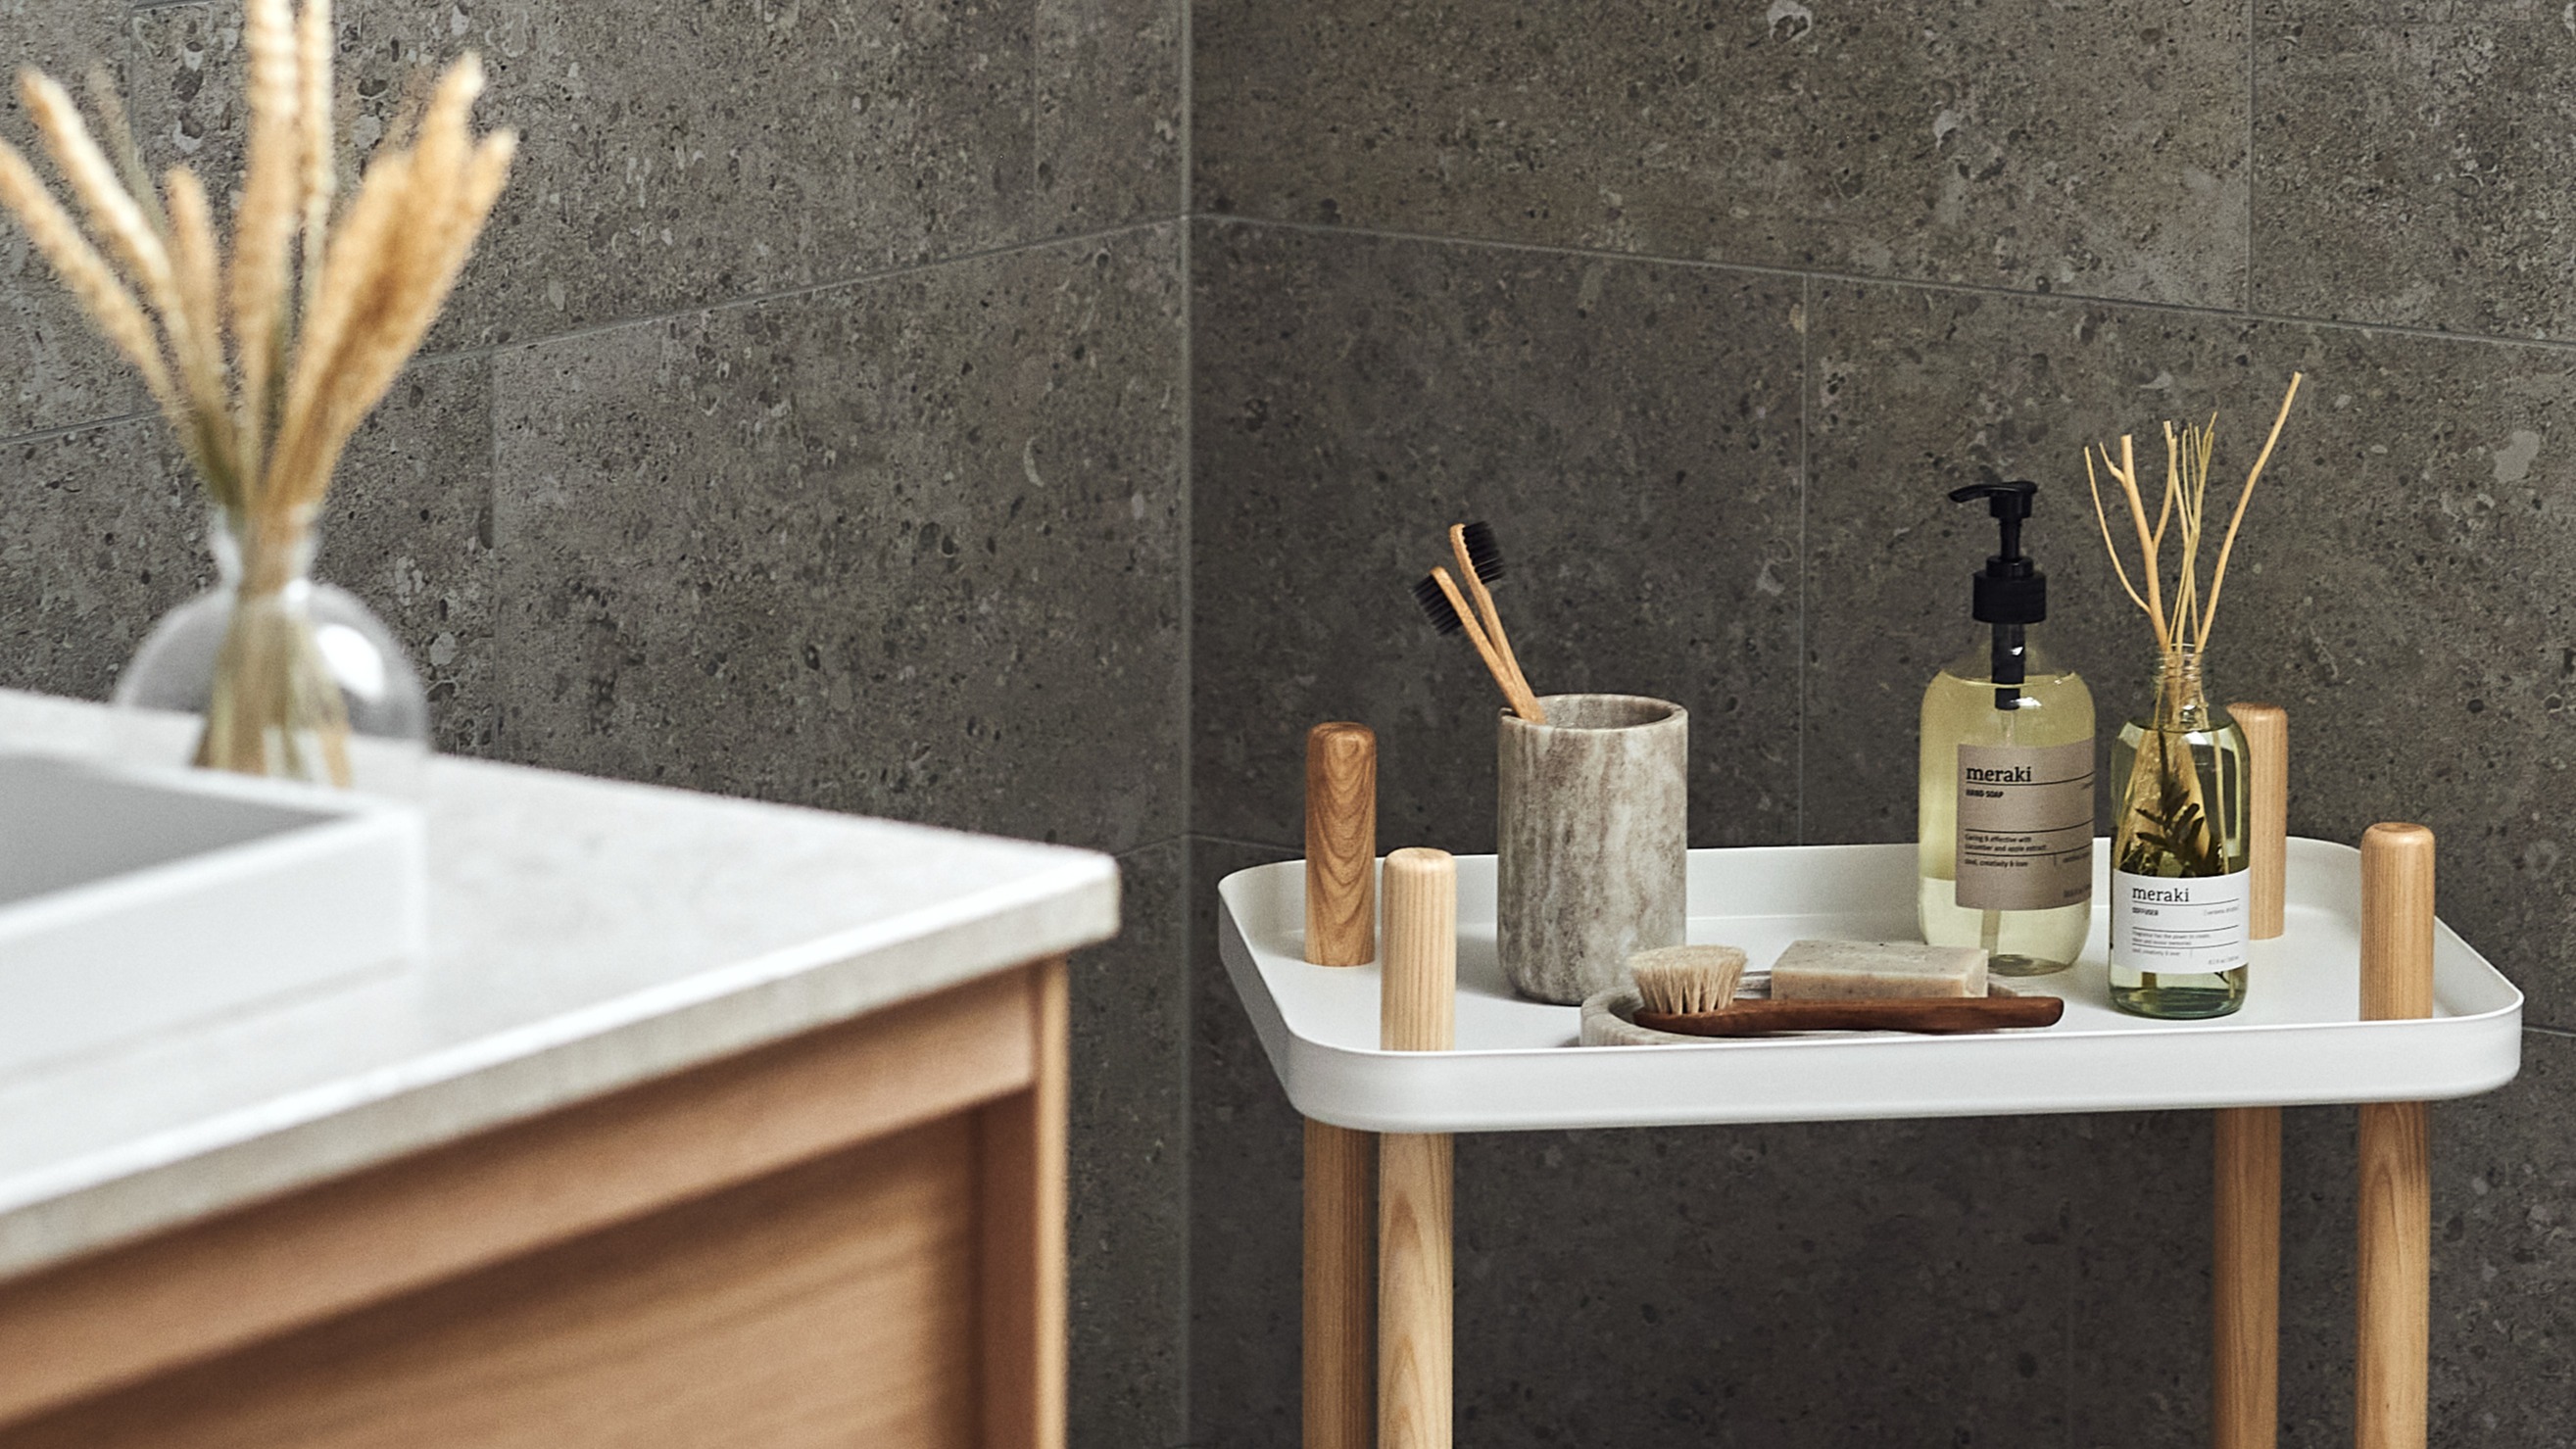 Concrete Soap Dish Draining Soap Holder Bathroom Accessories Modern Shower  Soap Dish Sponge Holder Soap Tray Minimalist 